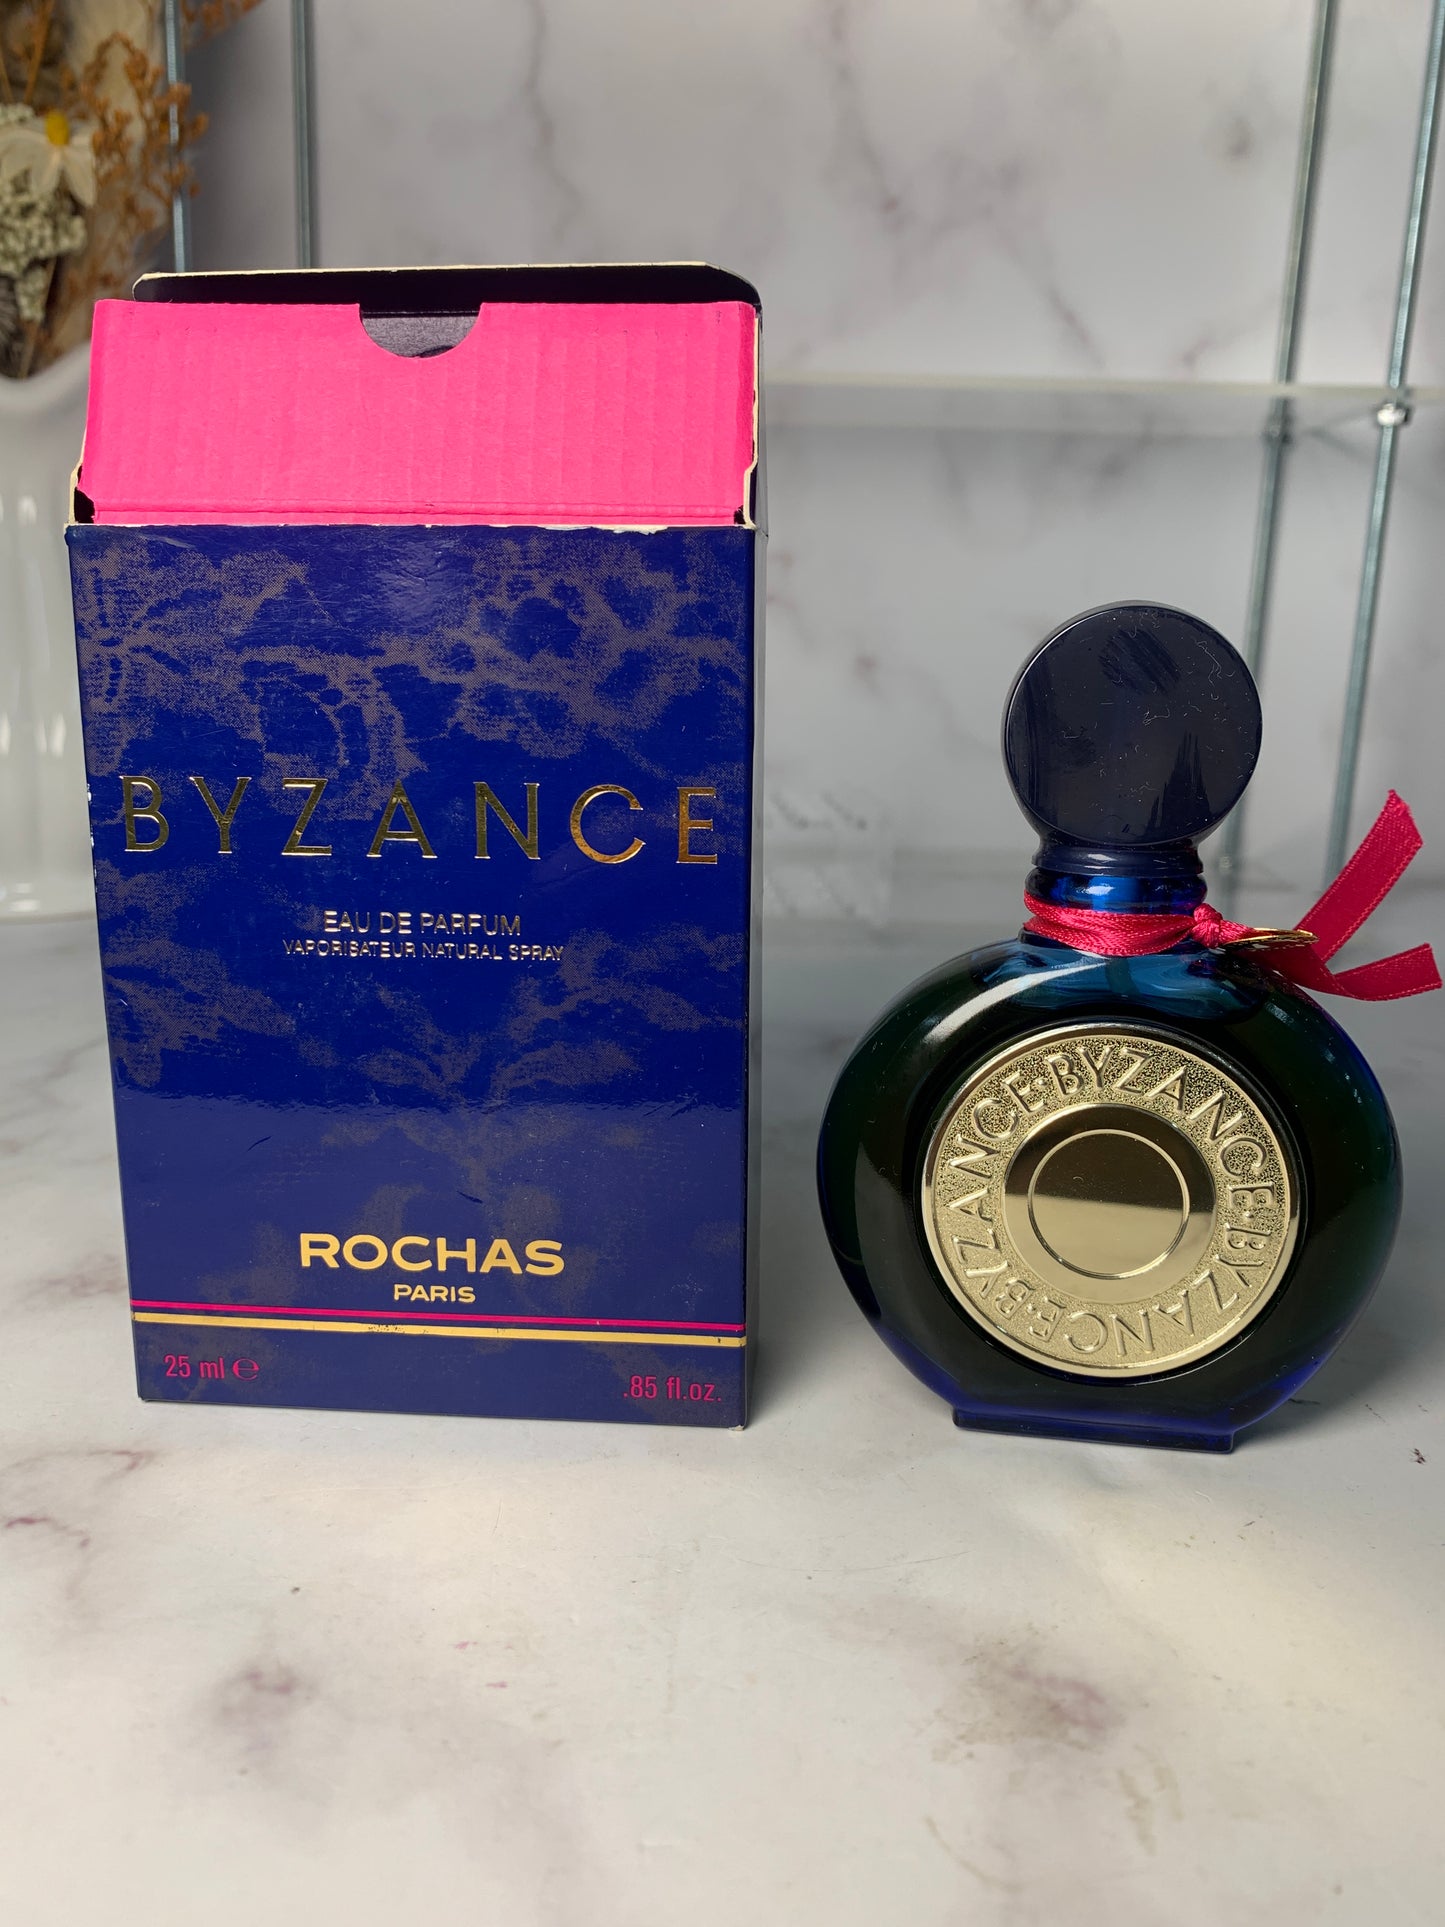 Rochas BYZANCE Eau de Parfum 25ml 0.85 oz - 171223-B